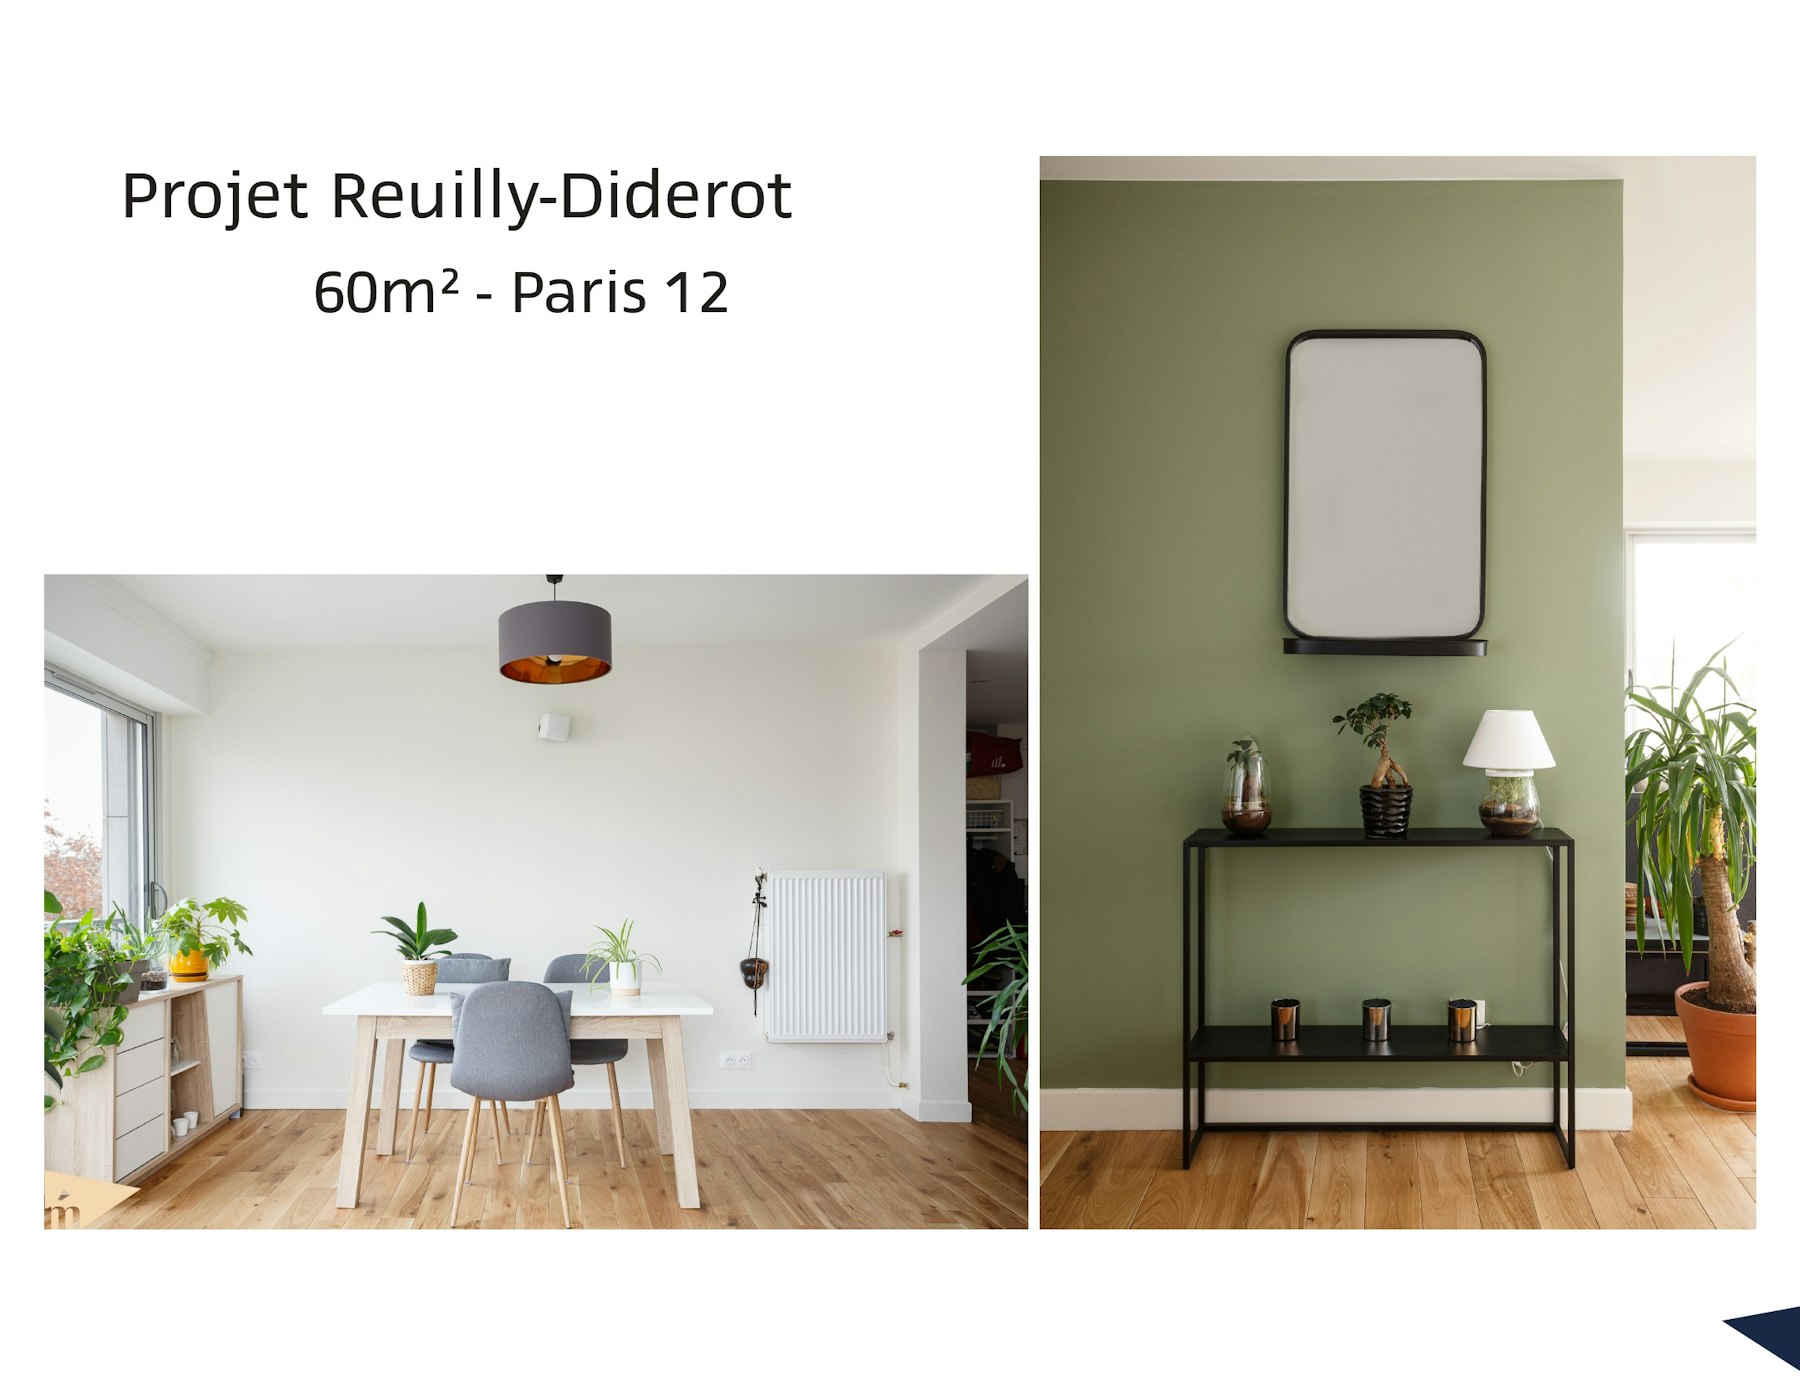 photo Projet Reuilly-Diderot - 60m² - Paris 12 Léa Mast - Architecte hemea